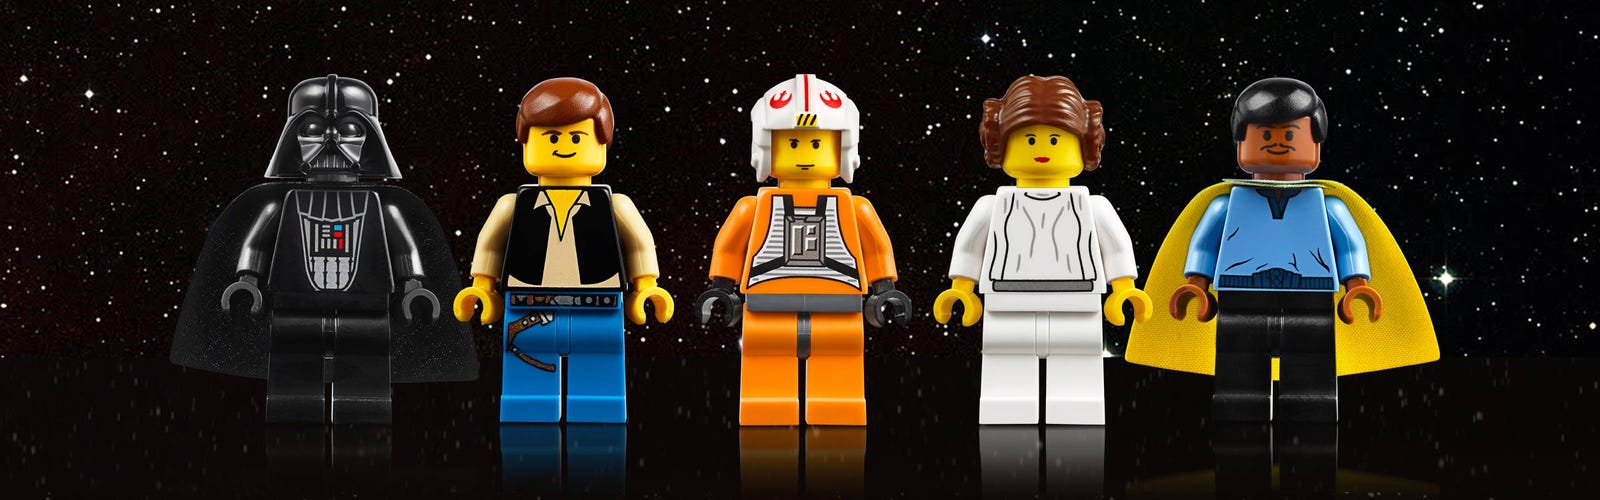 LEGO star wars 25th anniversary minifigures